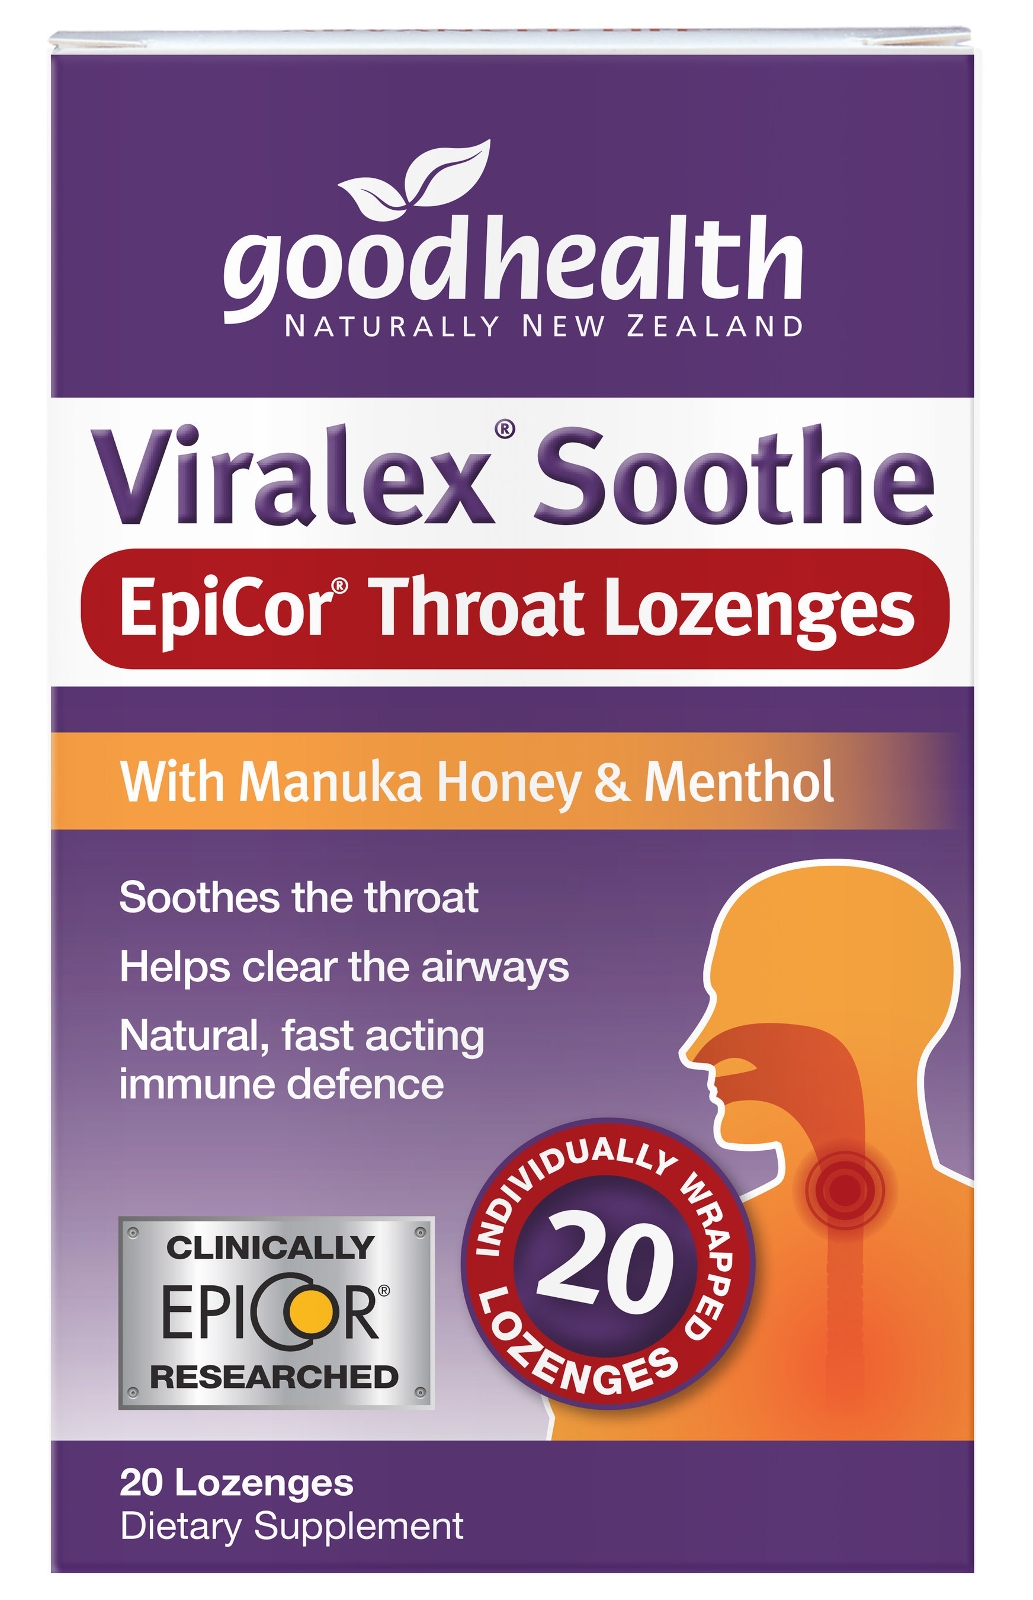 Good Health Viralex Soothe EpiCor Throat Lozenges